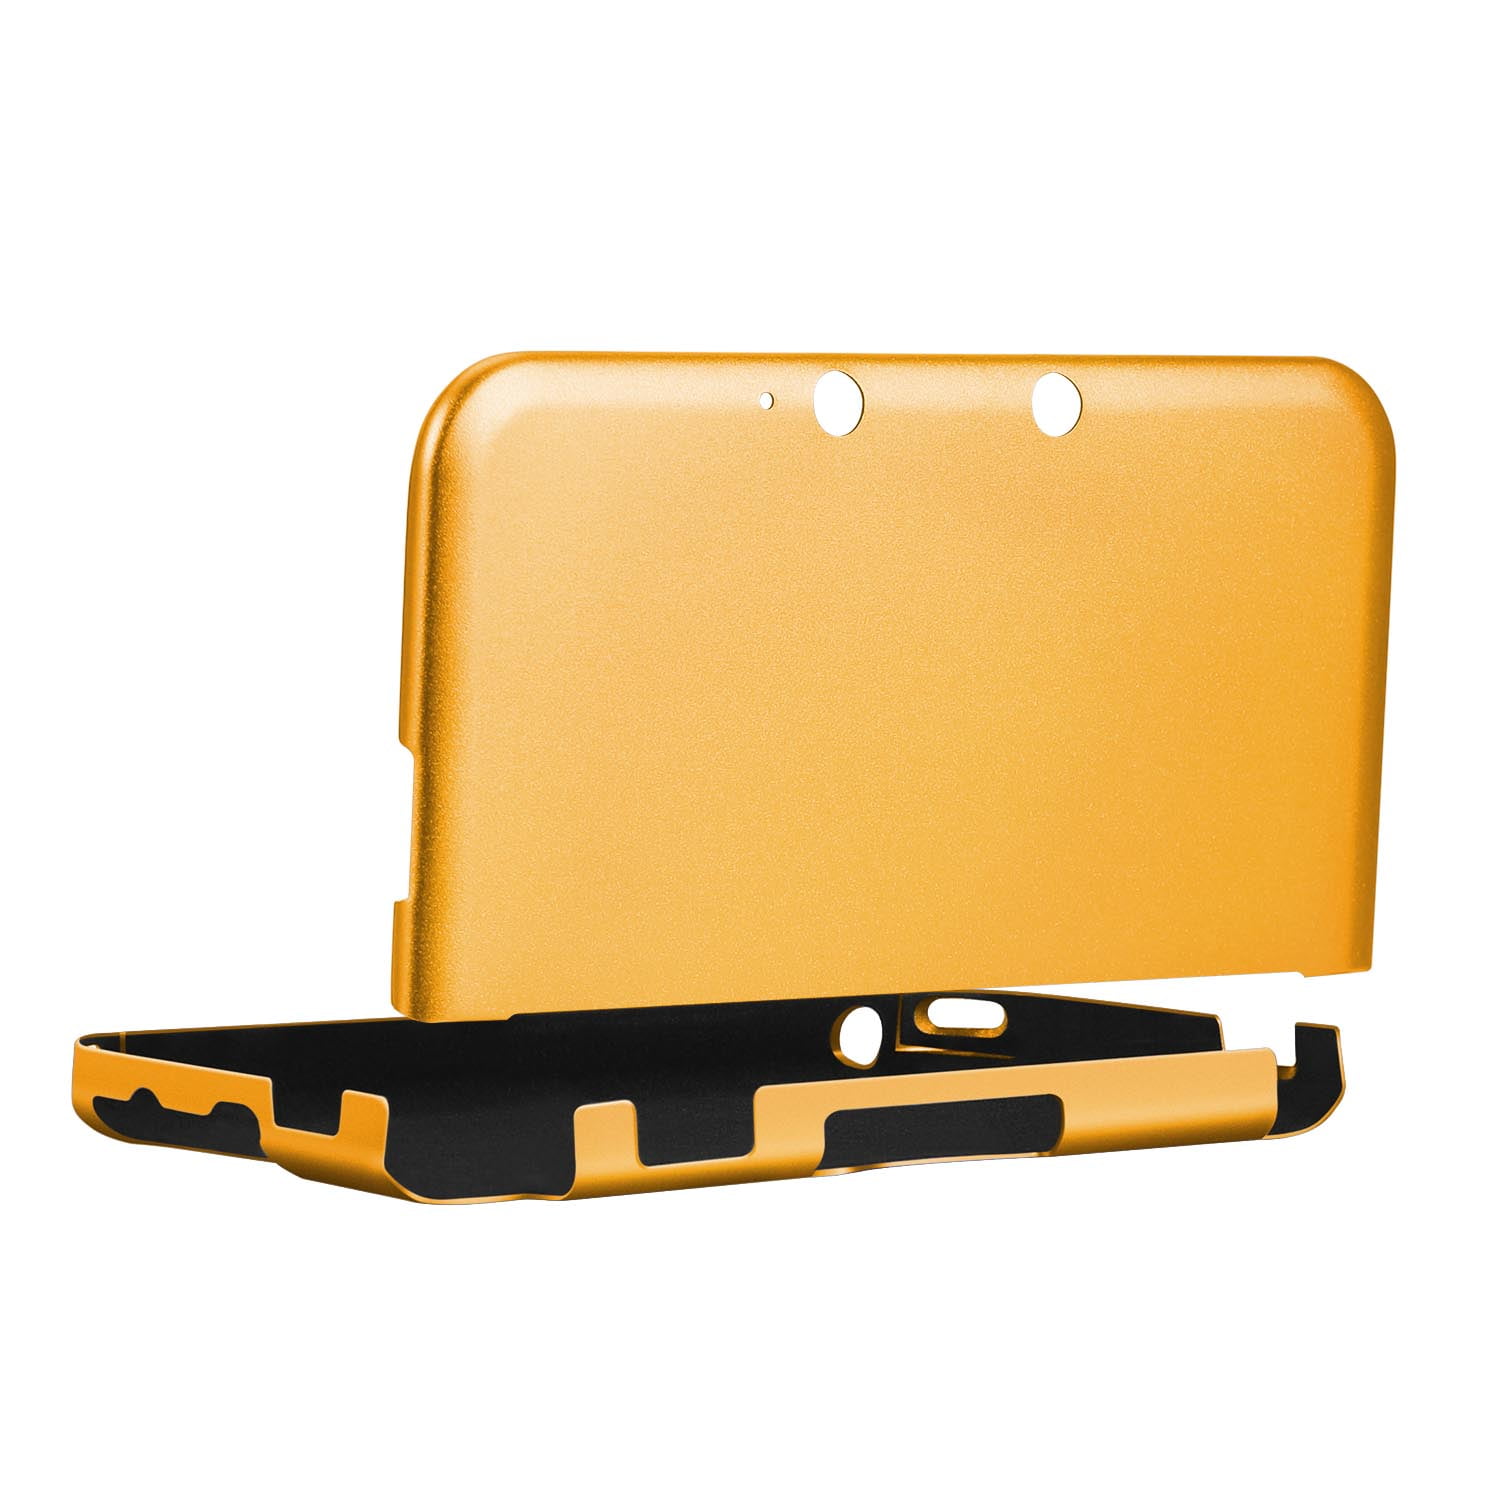 3DS XL LL Case (Gold) - Full Body Protective Snap-on Hard Shell Aluminium Plastic Skin Cover for Nintendo 3DS LL 2012 Original Model - Walmart.com